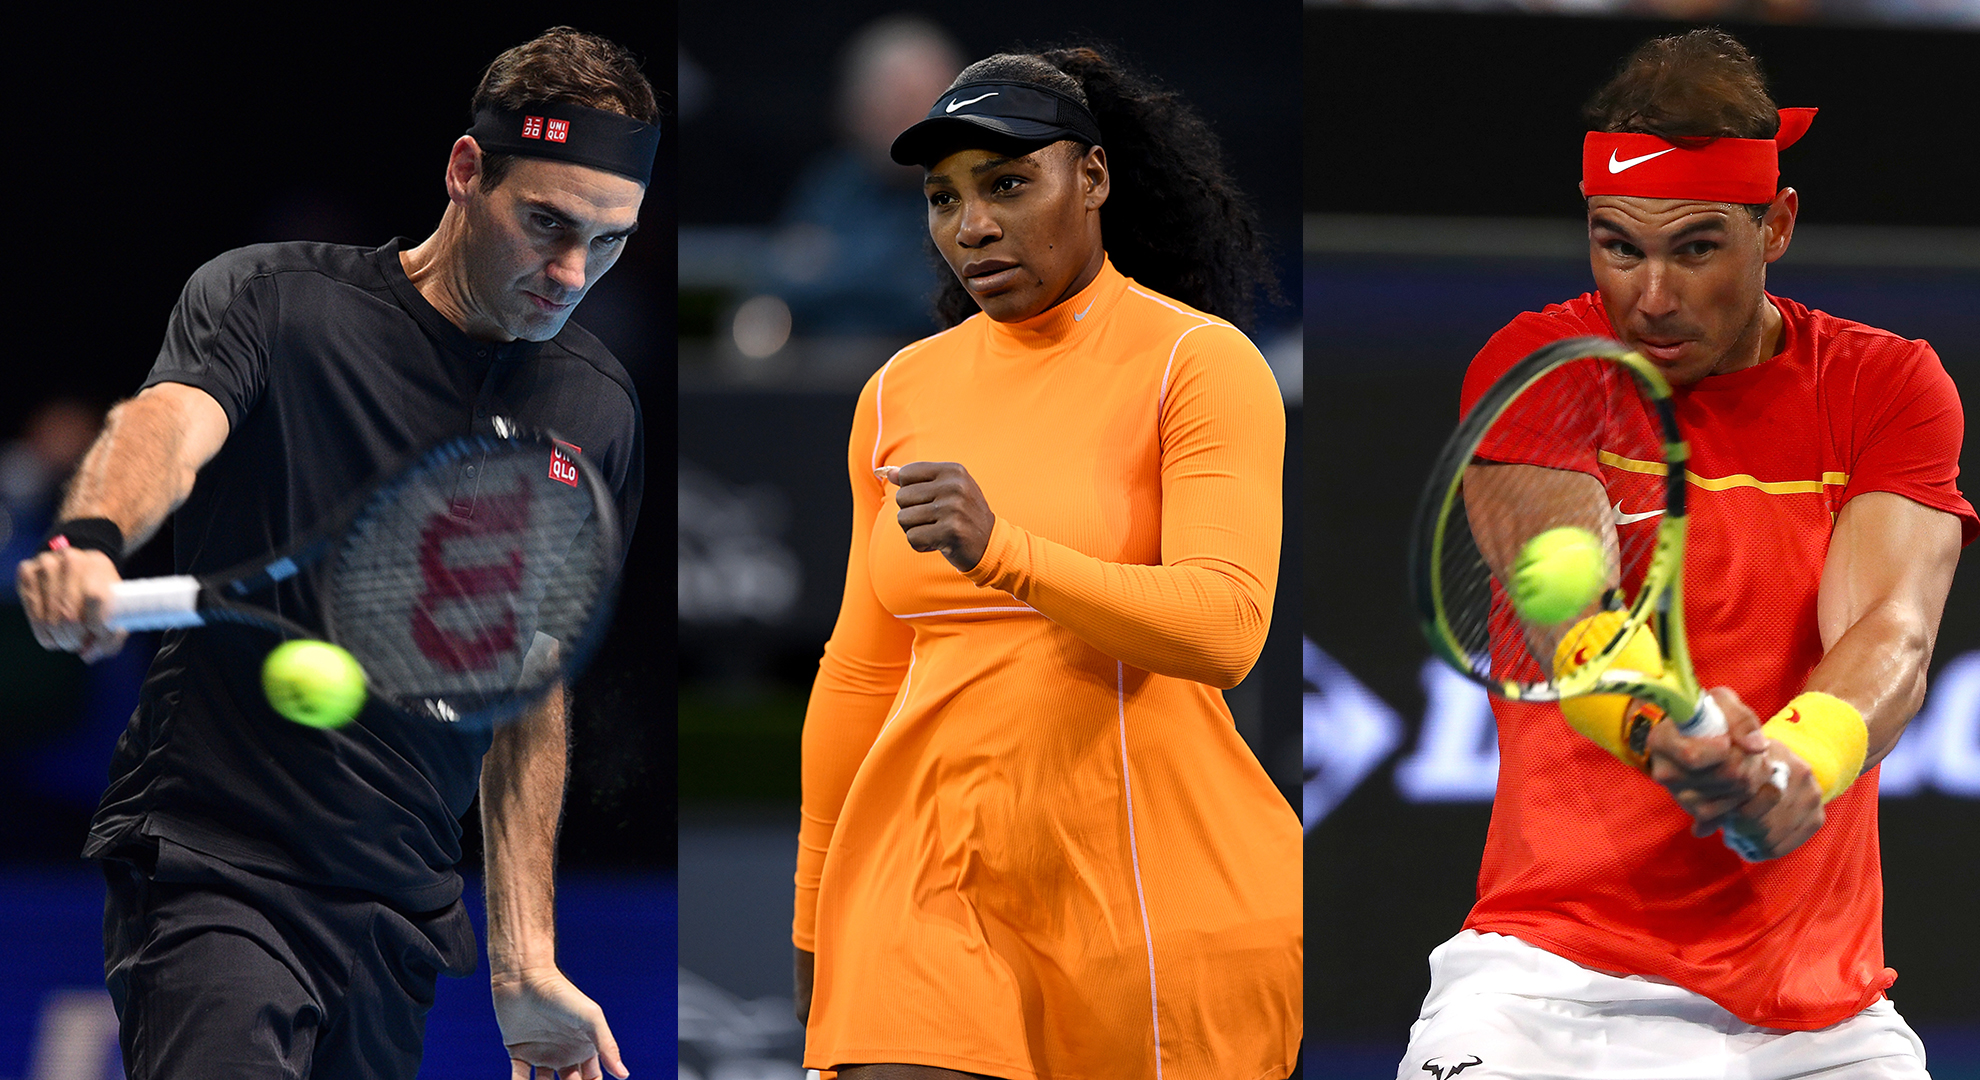 Serena Williams Roger Federer Rafael Nadal rally for relief 2020 Australia